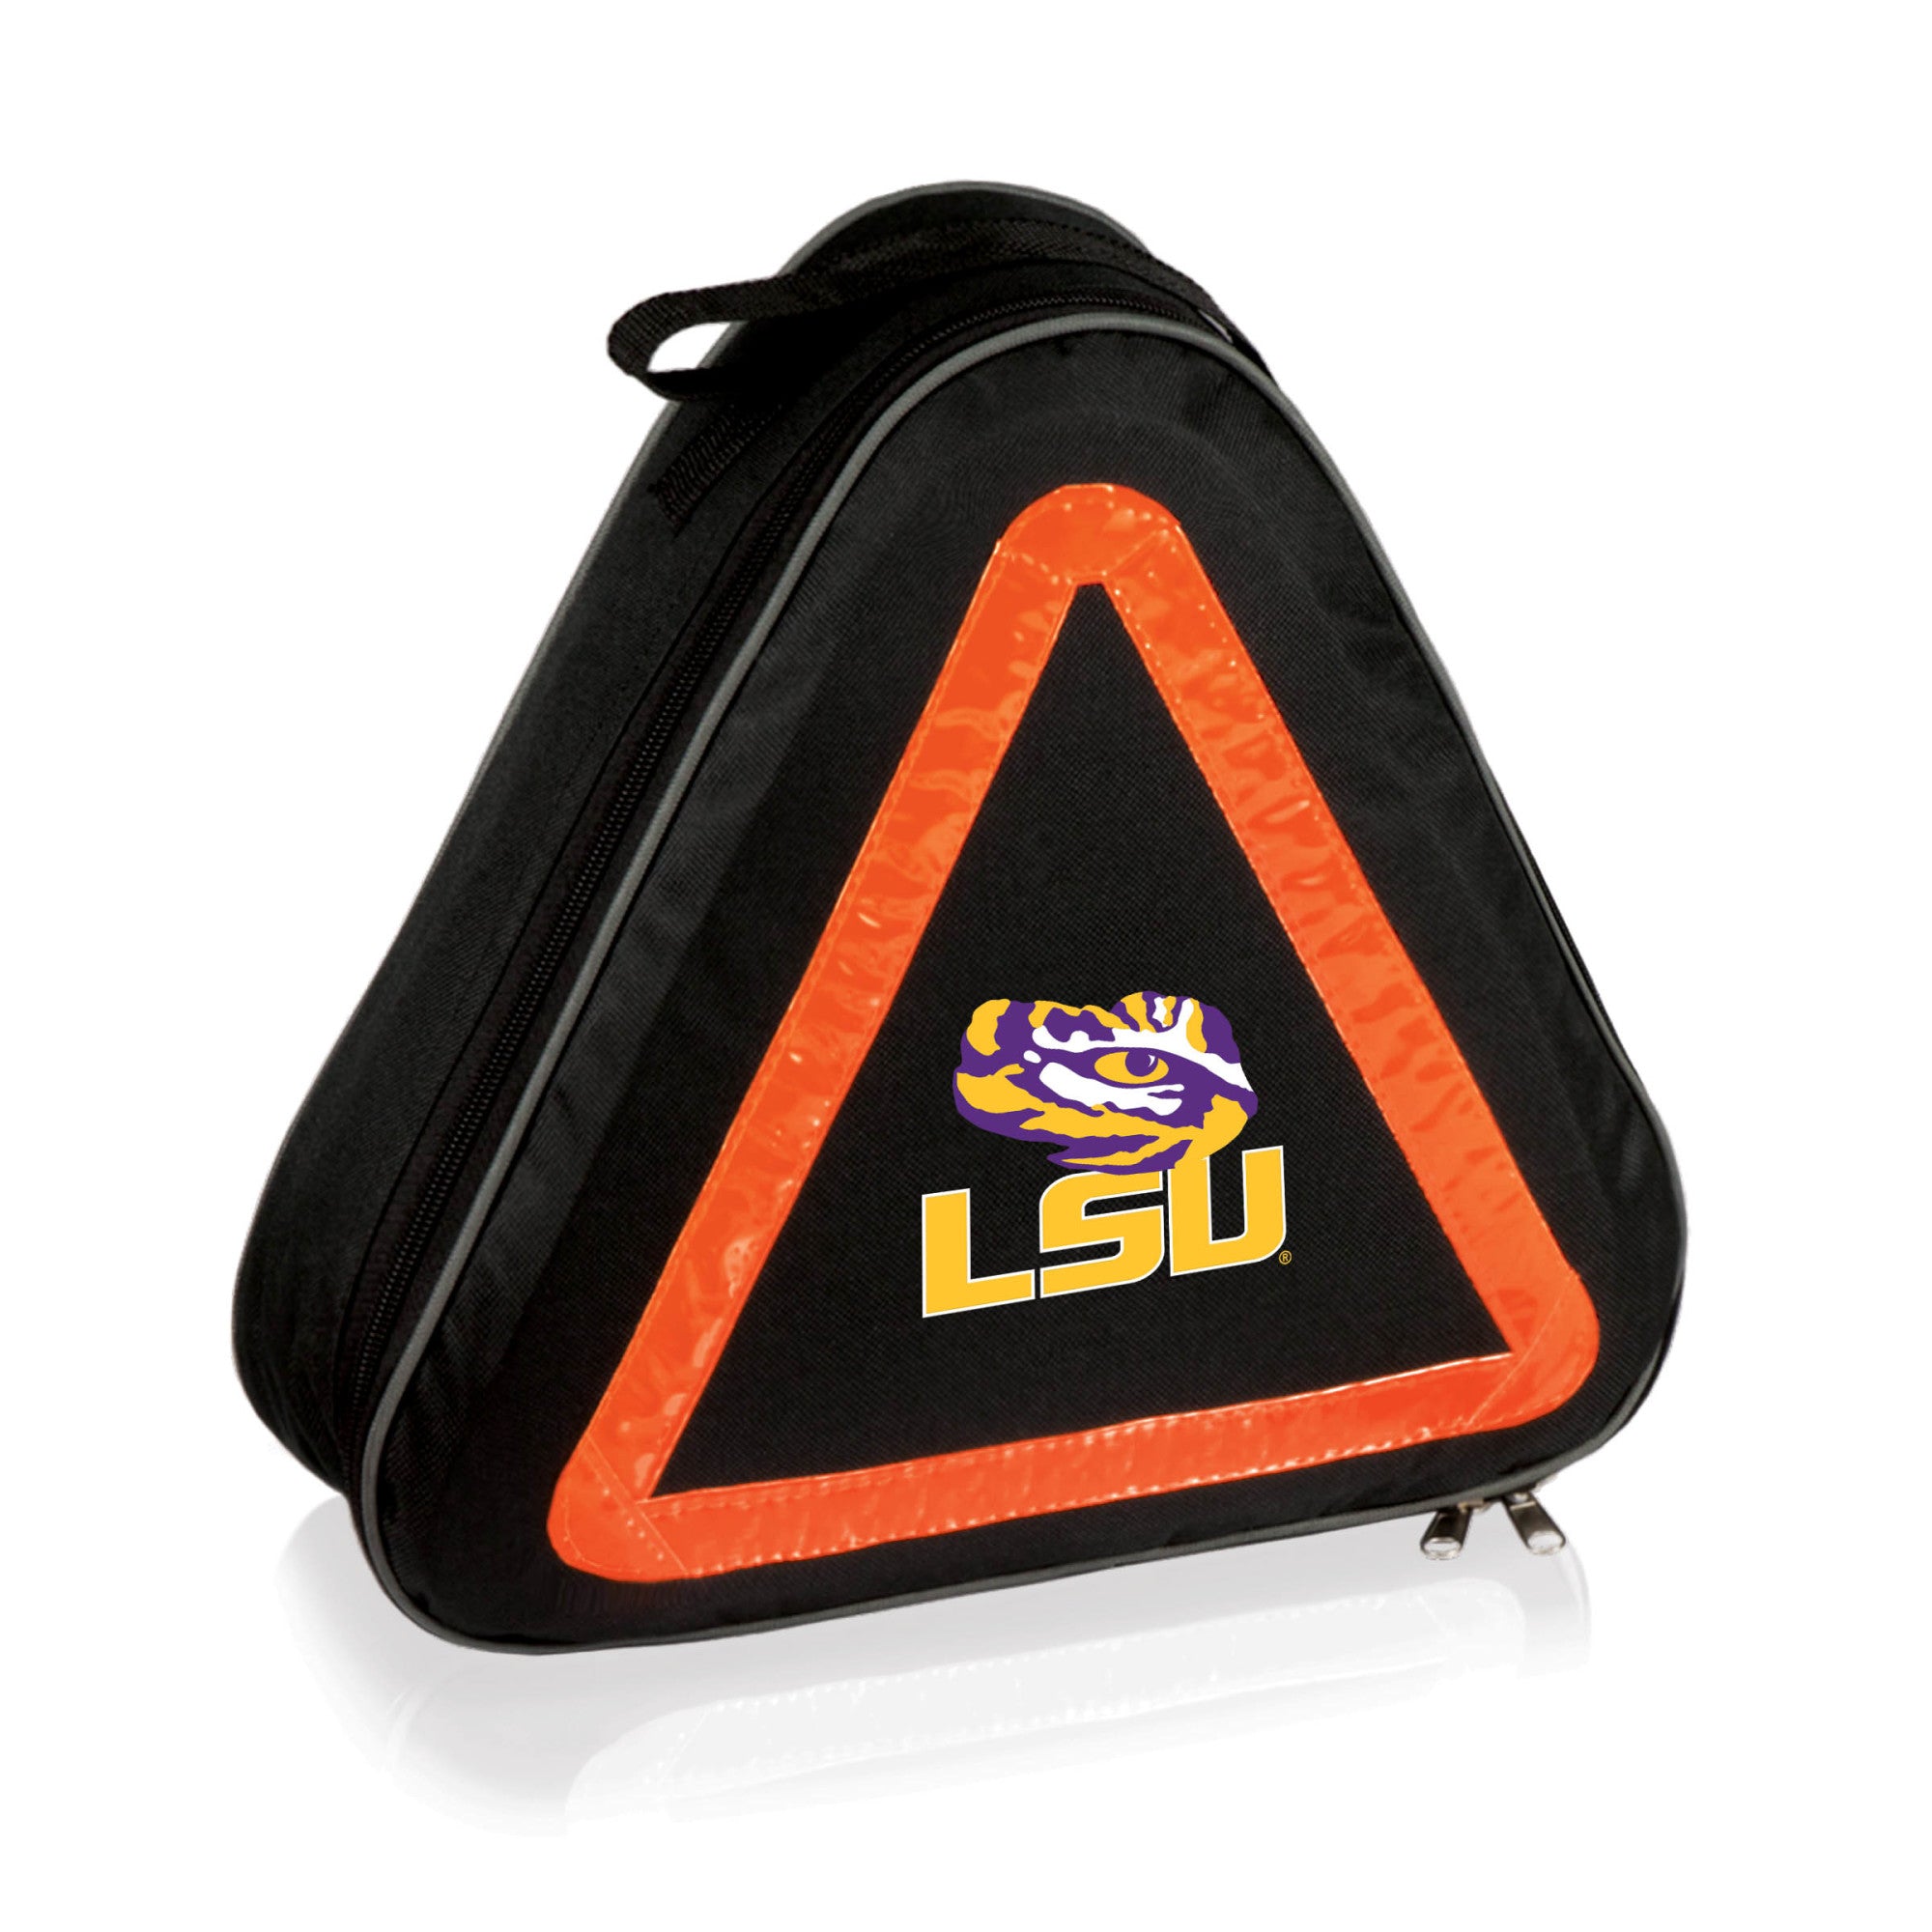 LSU Tigers - Roadside Emergency Car Kit